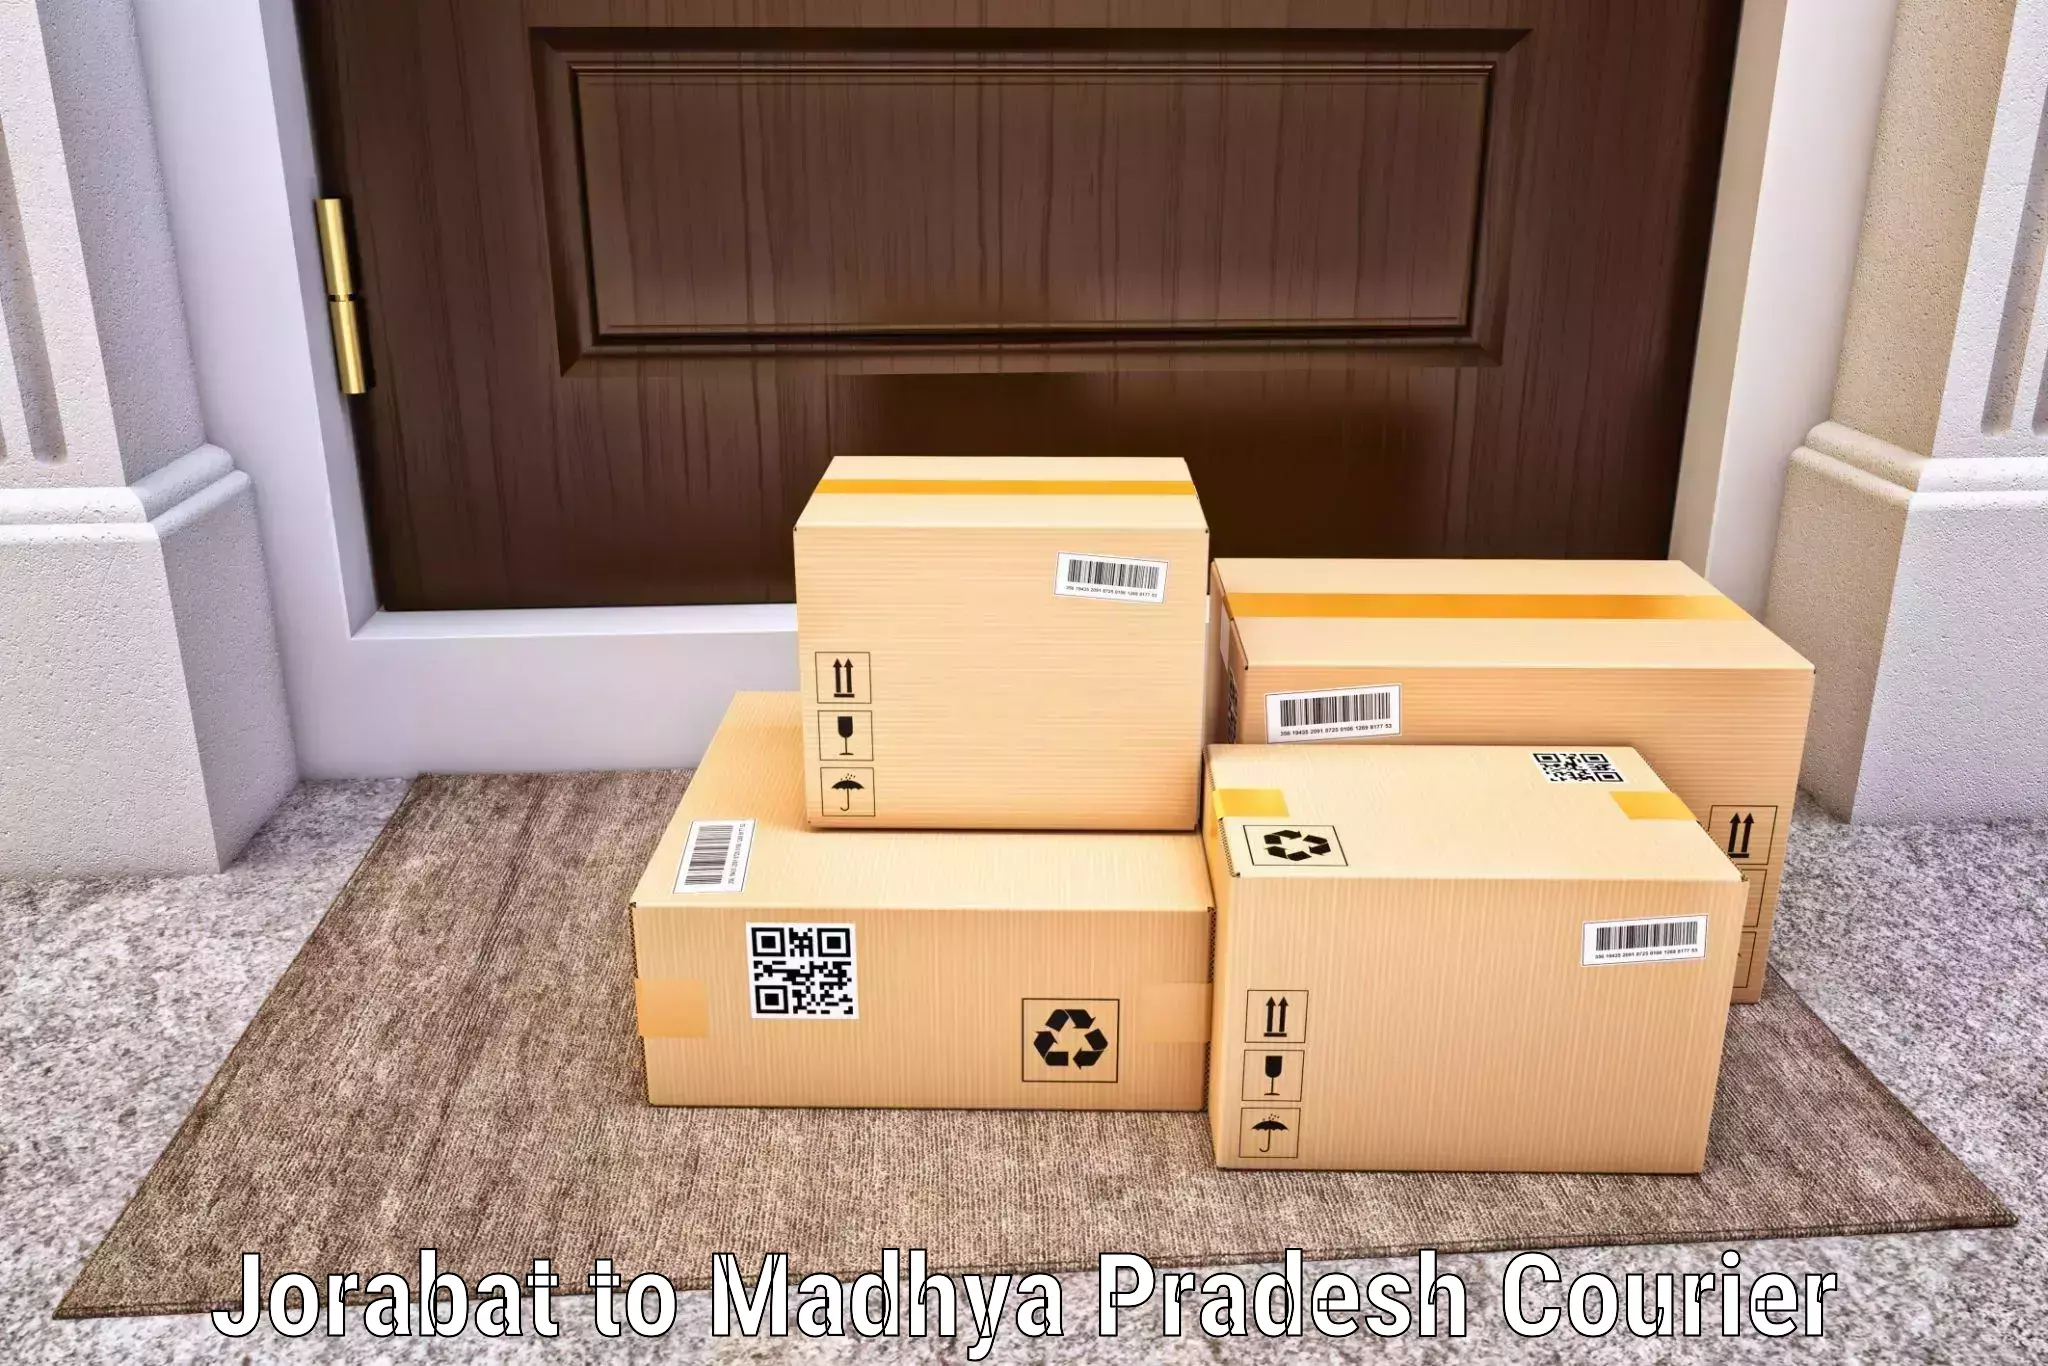 Residential courier service Jorabat to Gosalpur